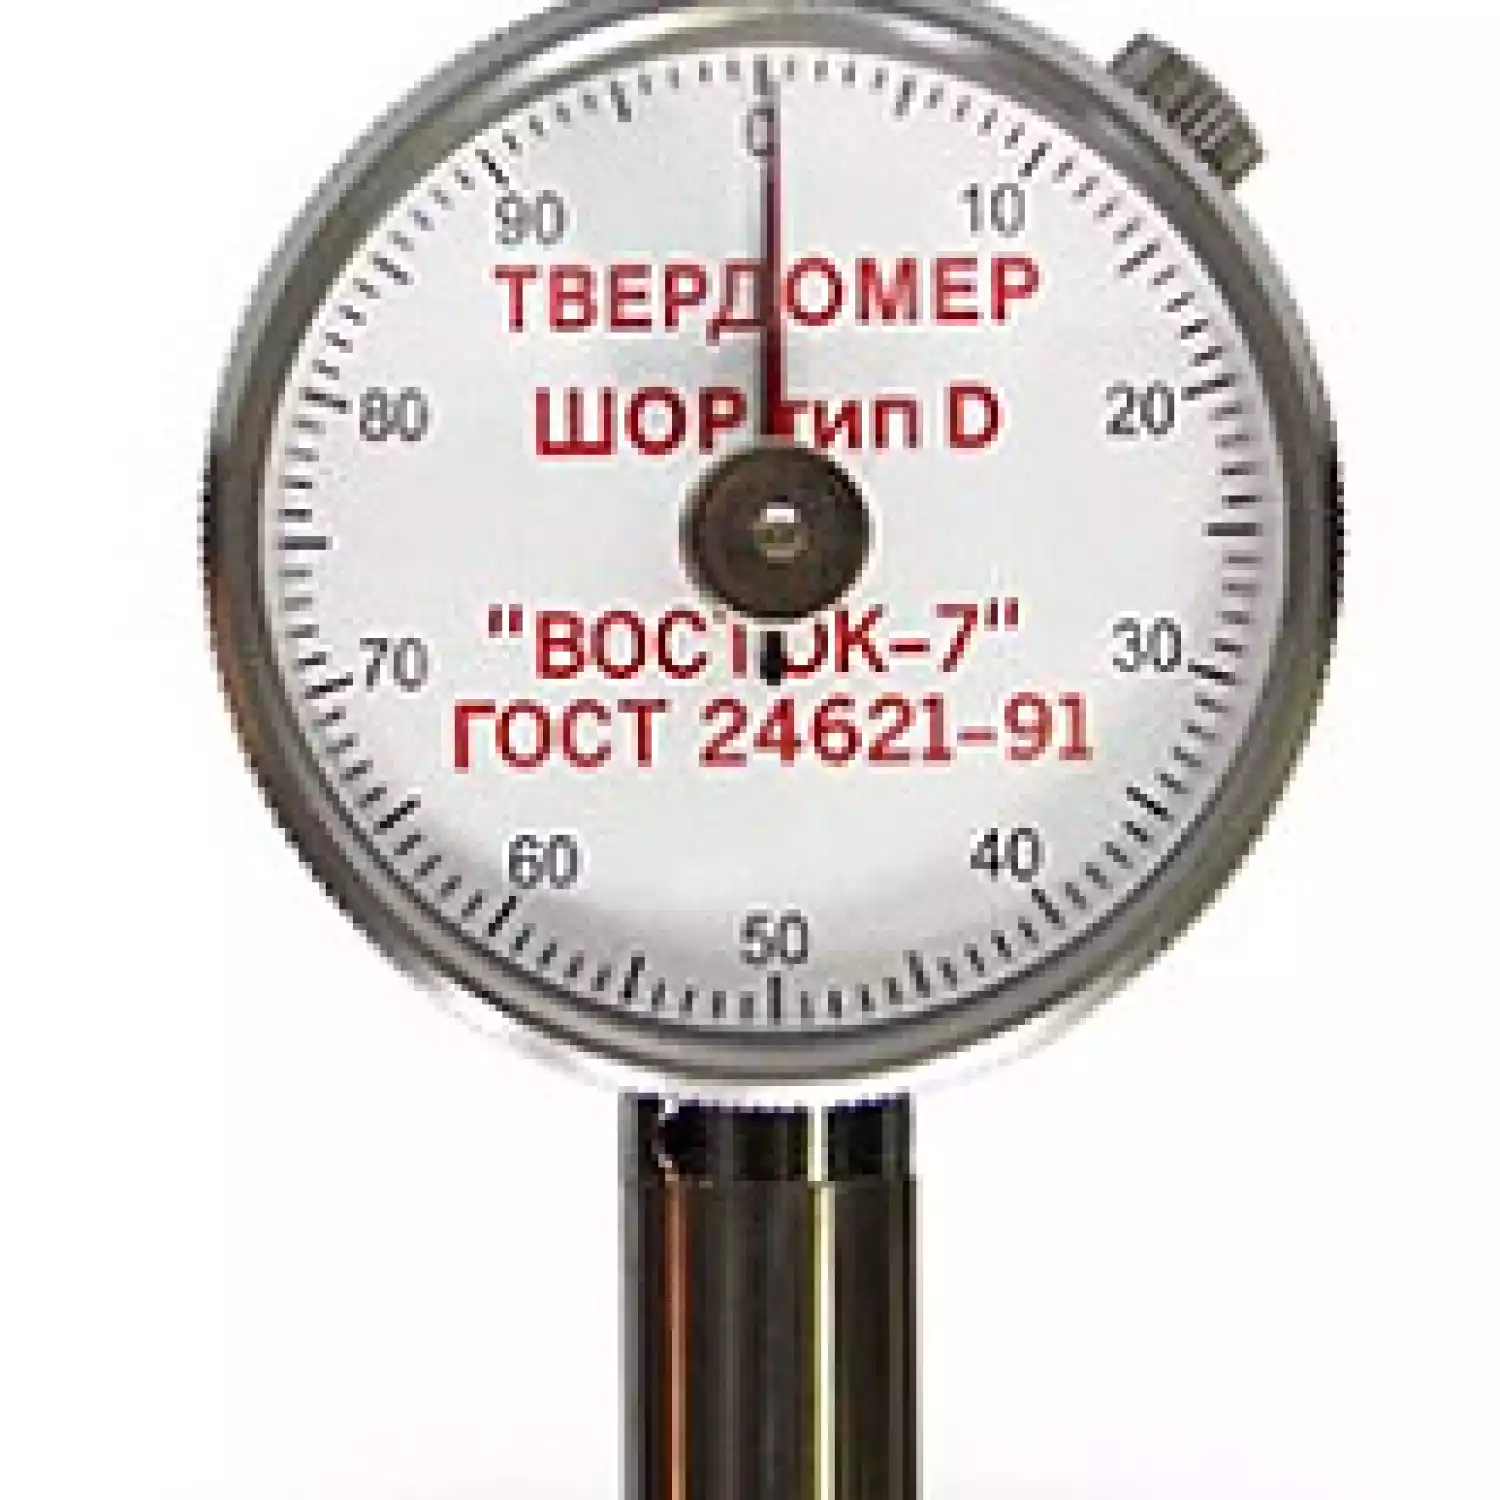 ТВР-D твердомер (дюрометр) Шора тип D с аналоговым индикатором - 1